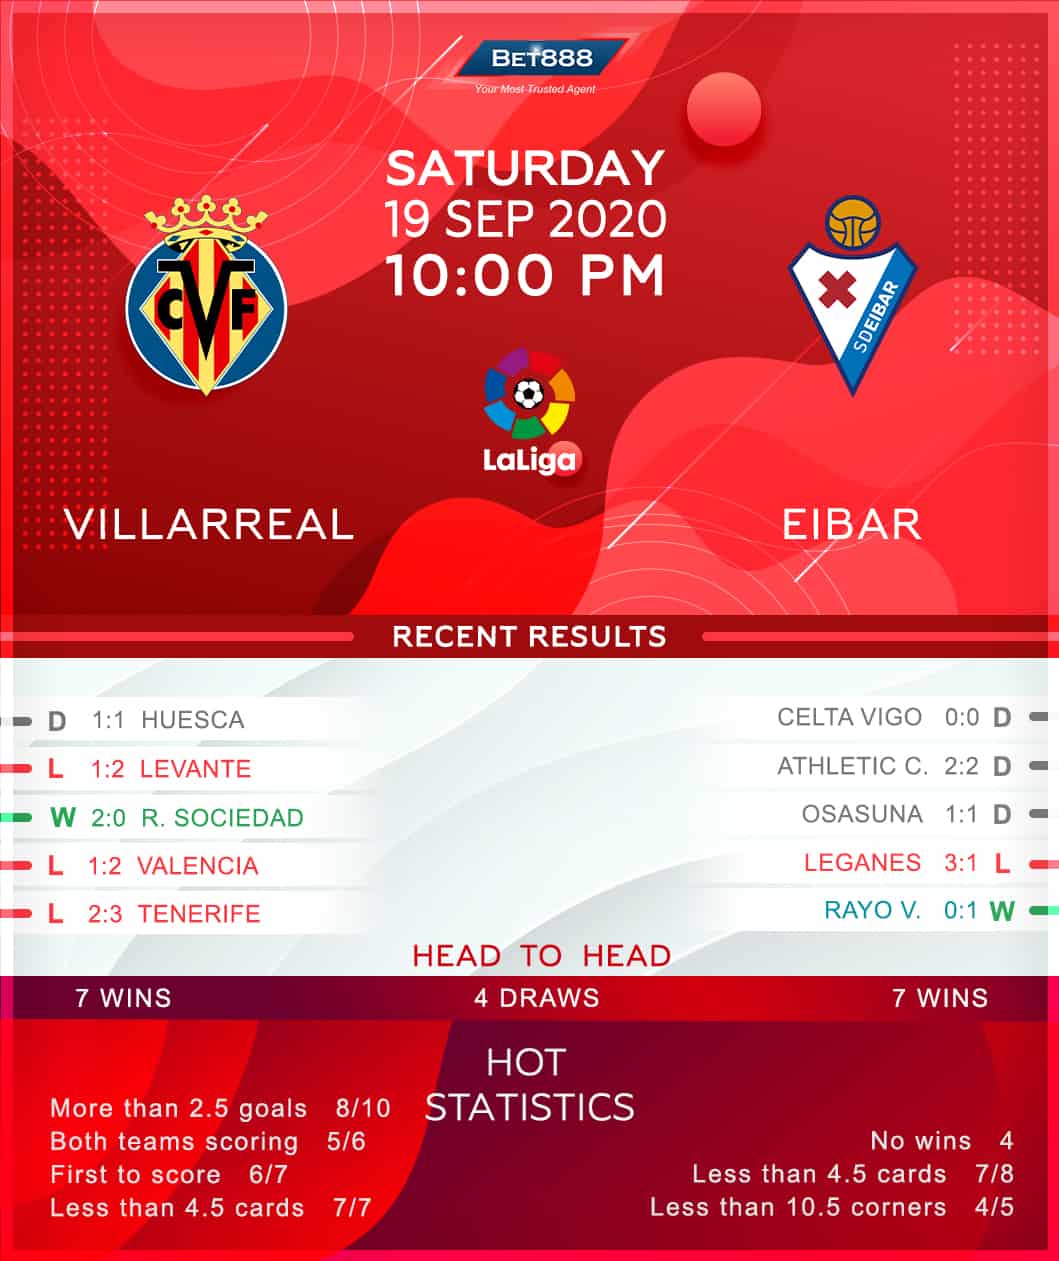 Villarreal vs Eibar﻿ 19/09/20